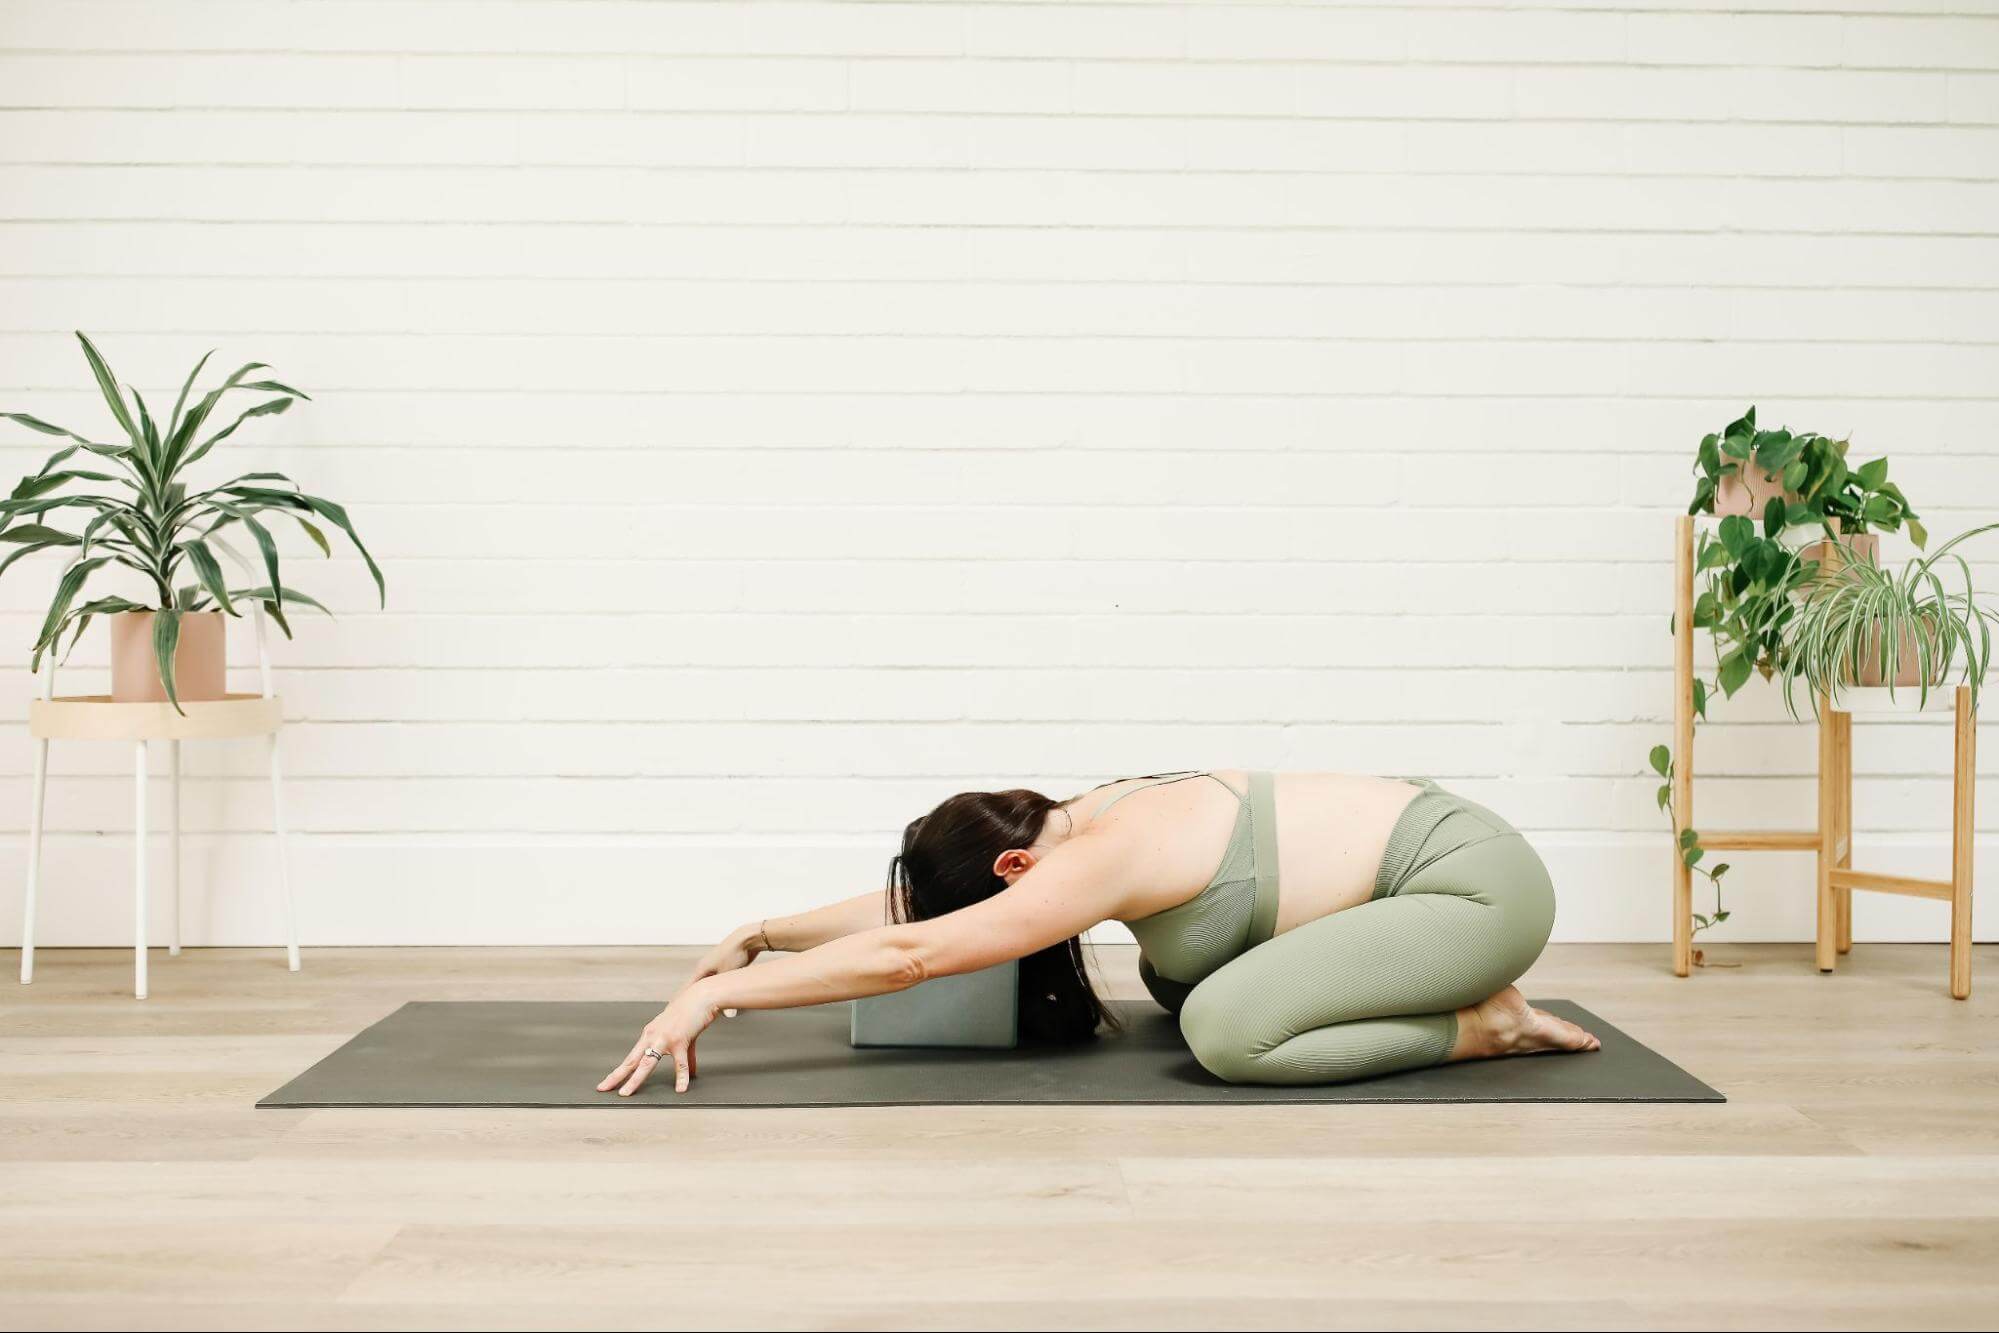 Is yoga safe during pregnancy?